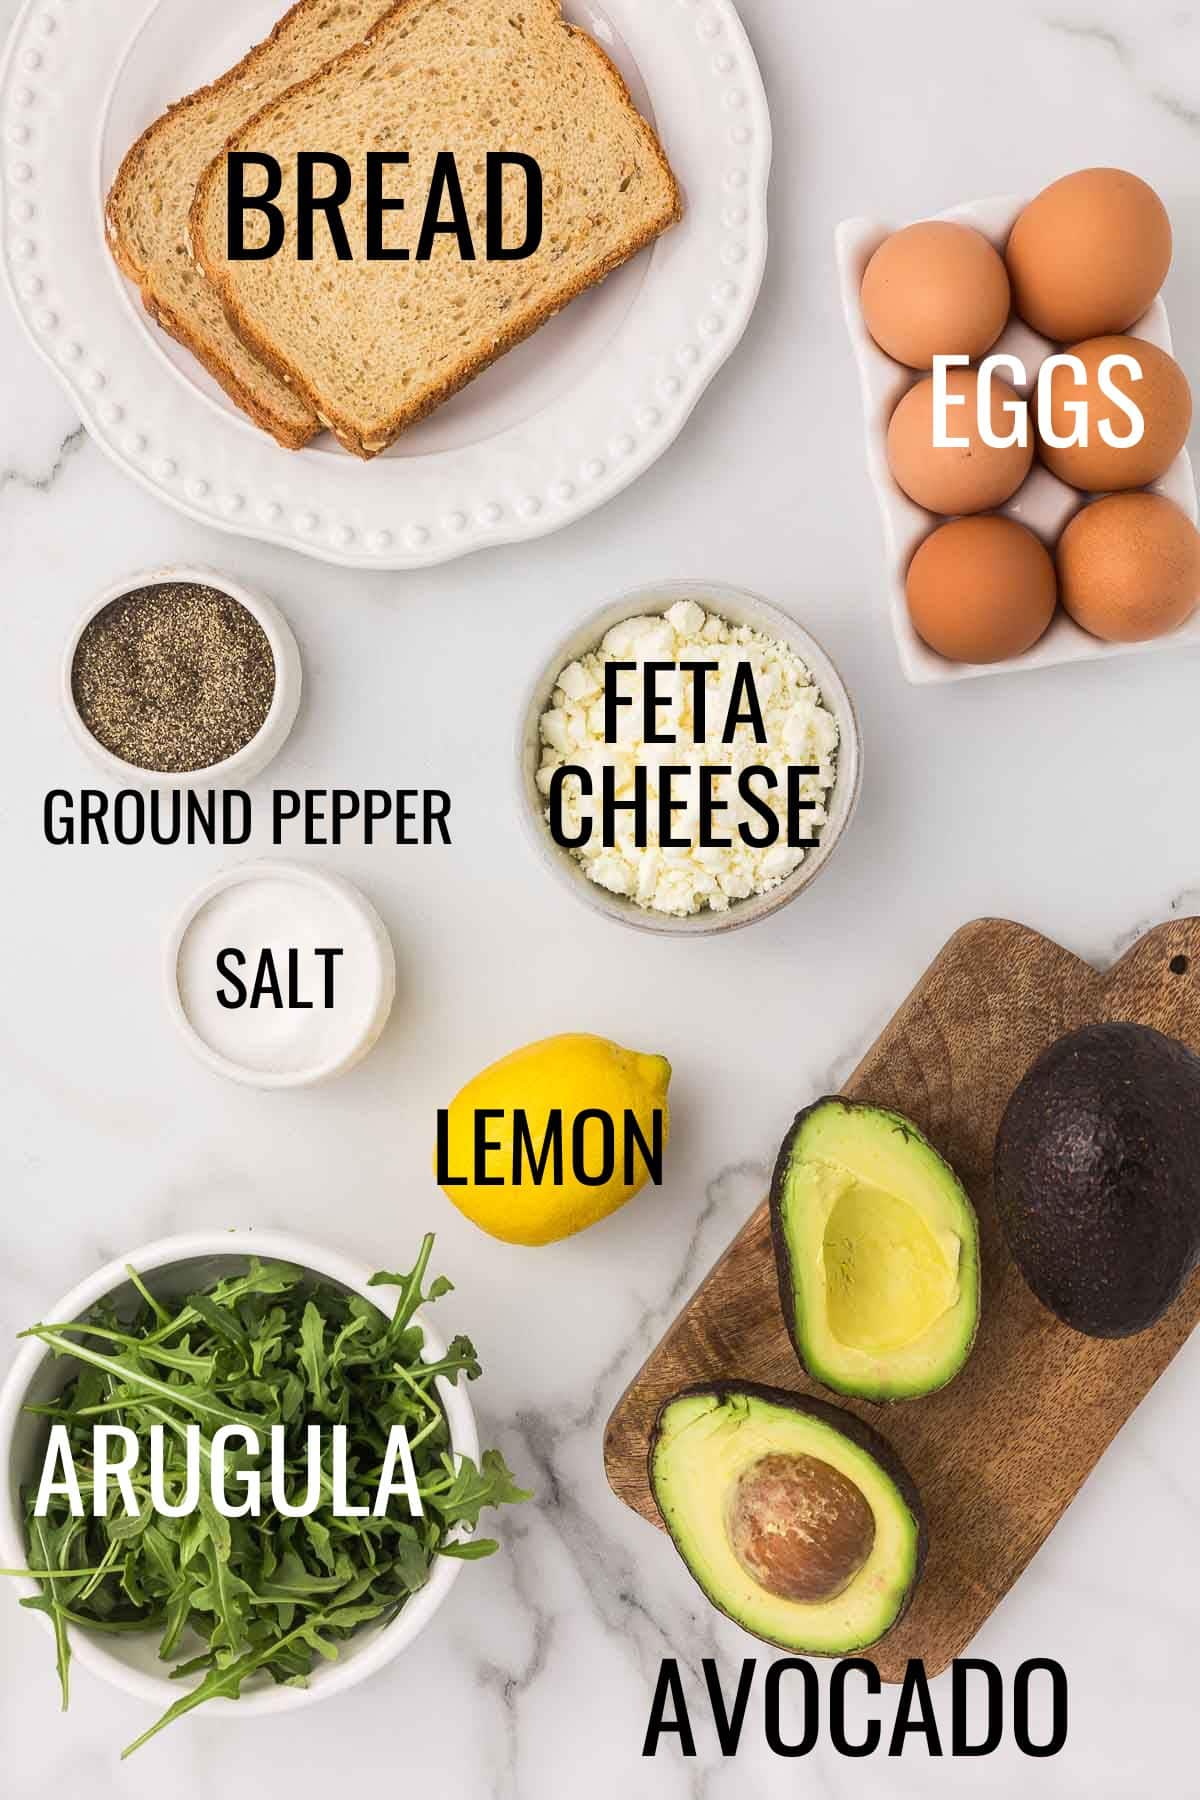 feta cheese, eggs, bread, arugula, avocado, lemon, salt, and pepper in small bowls on a marble countertop